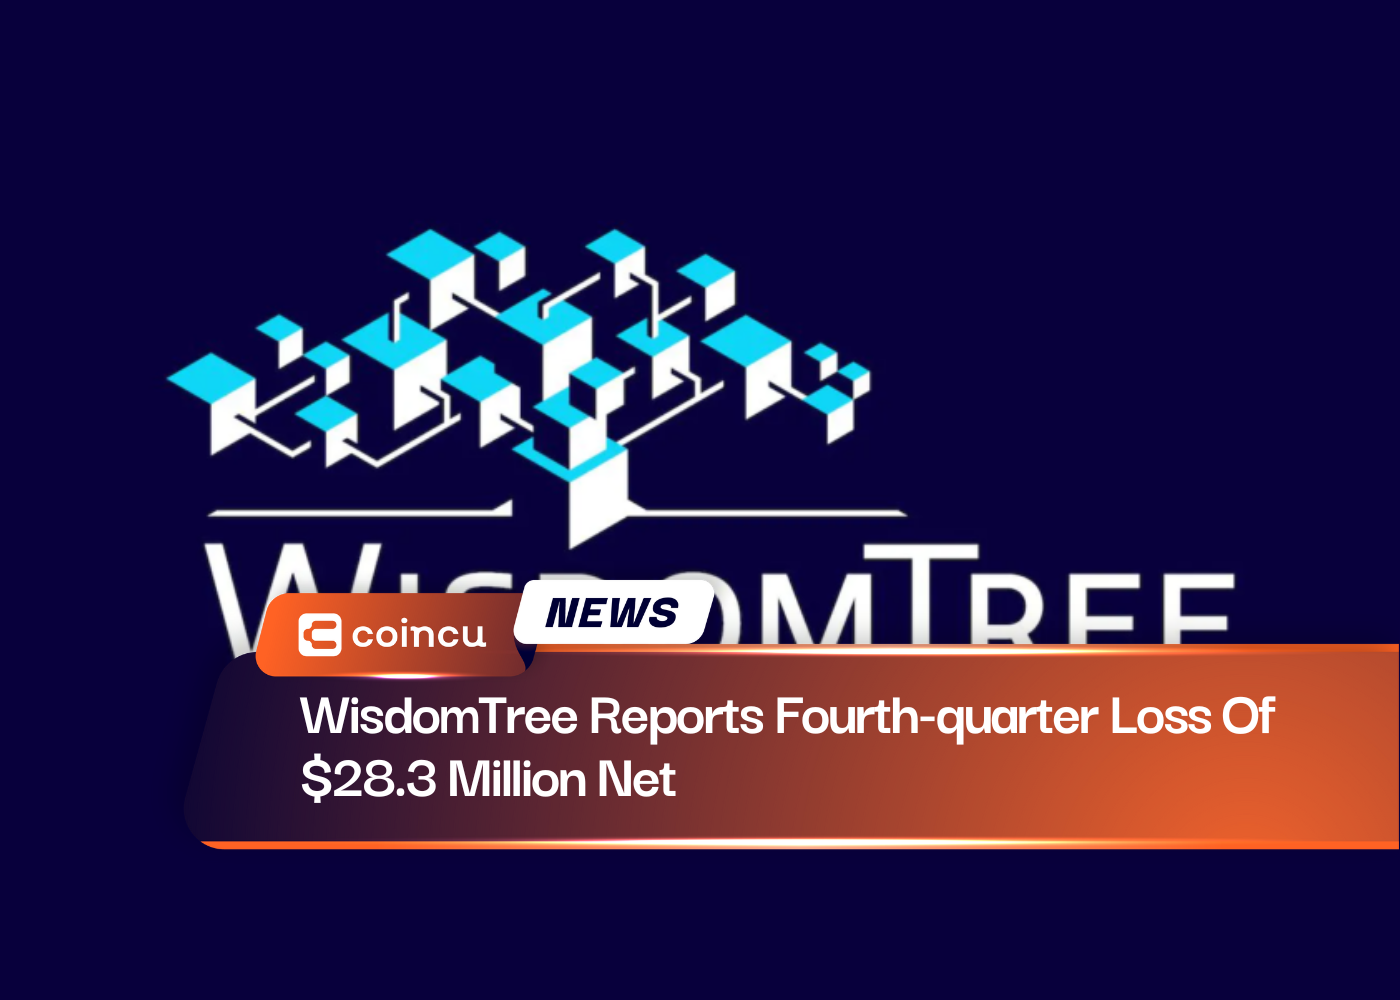 WisdomTree Reports Fourth-quarter Loss Of $28.3 Million Net